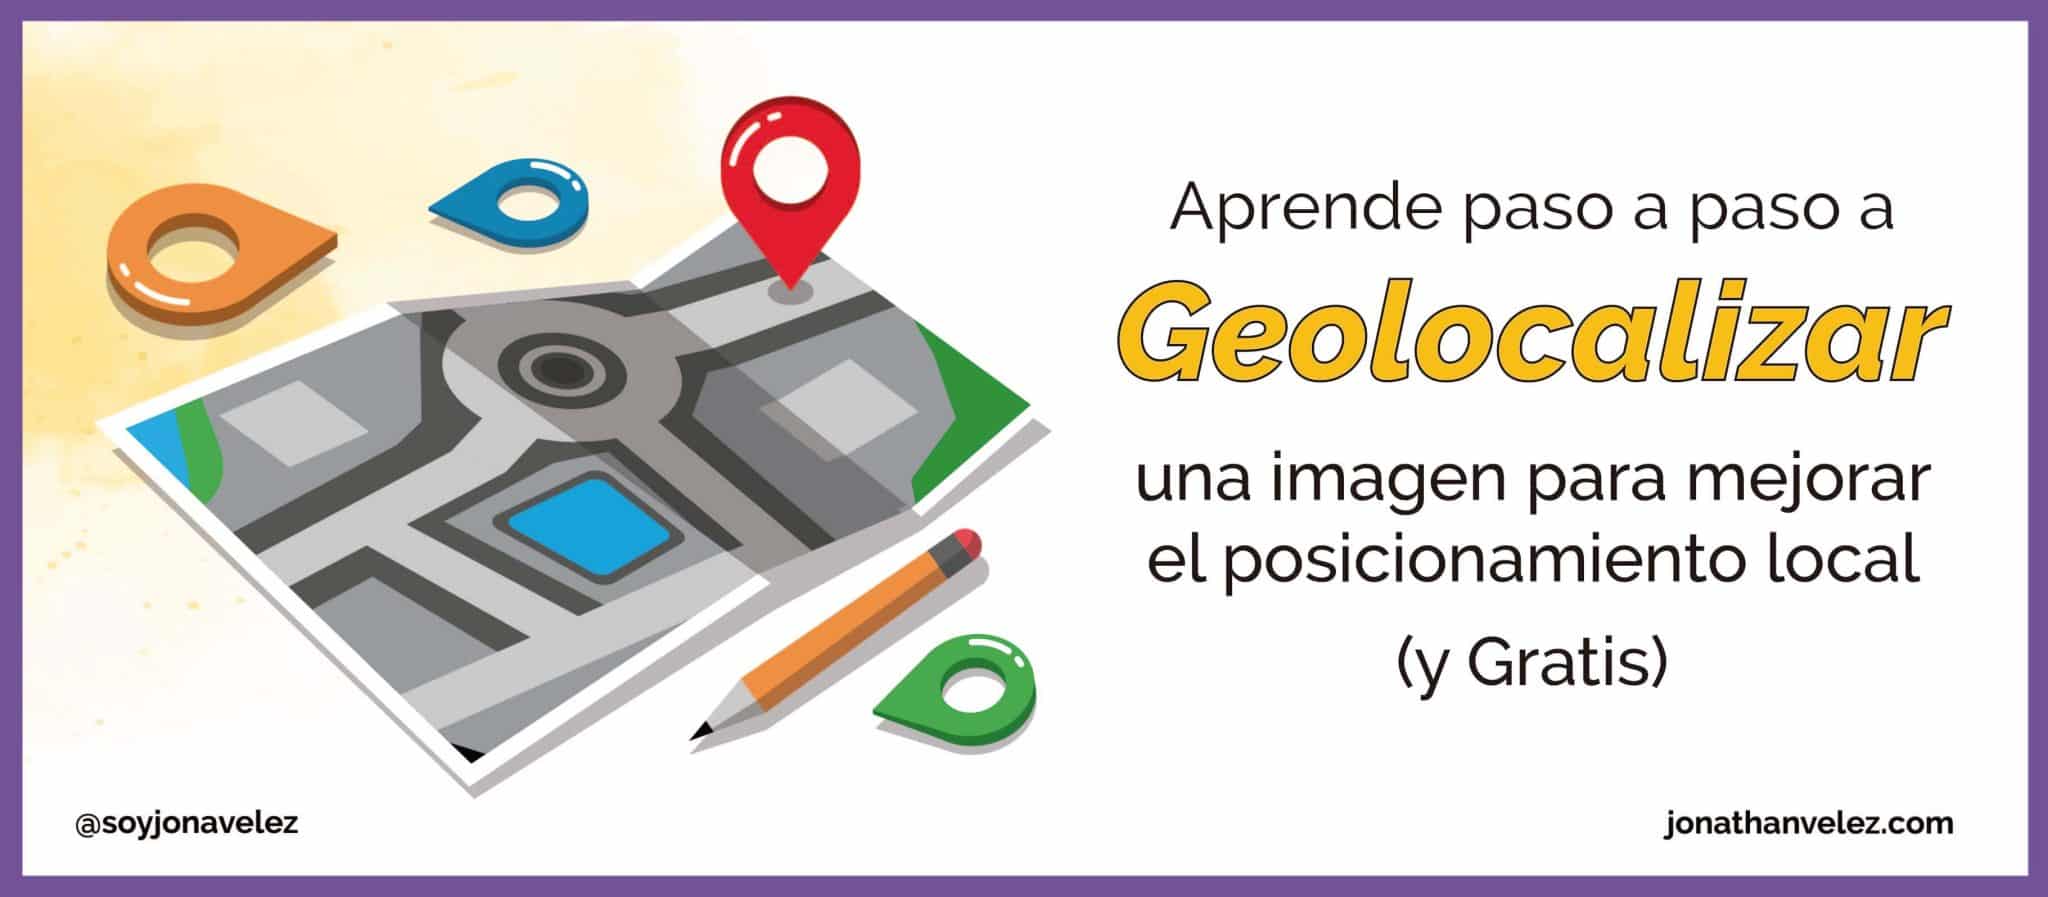 geolocalizar imagenes gratis scaled